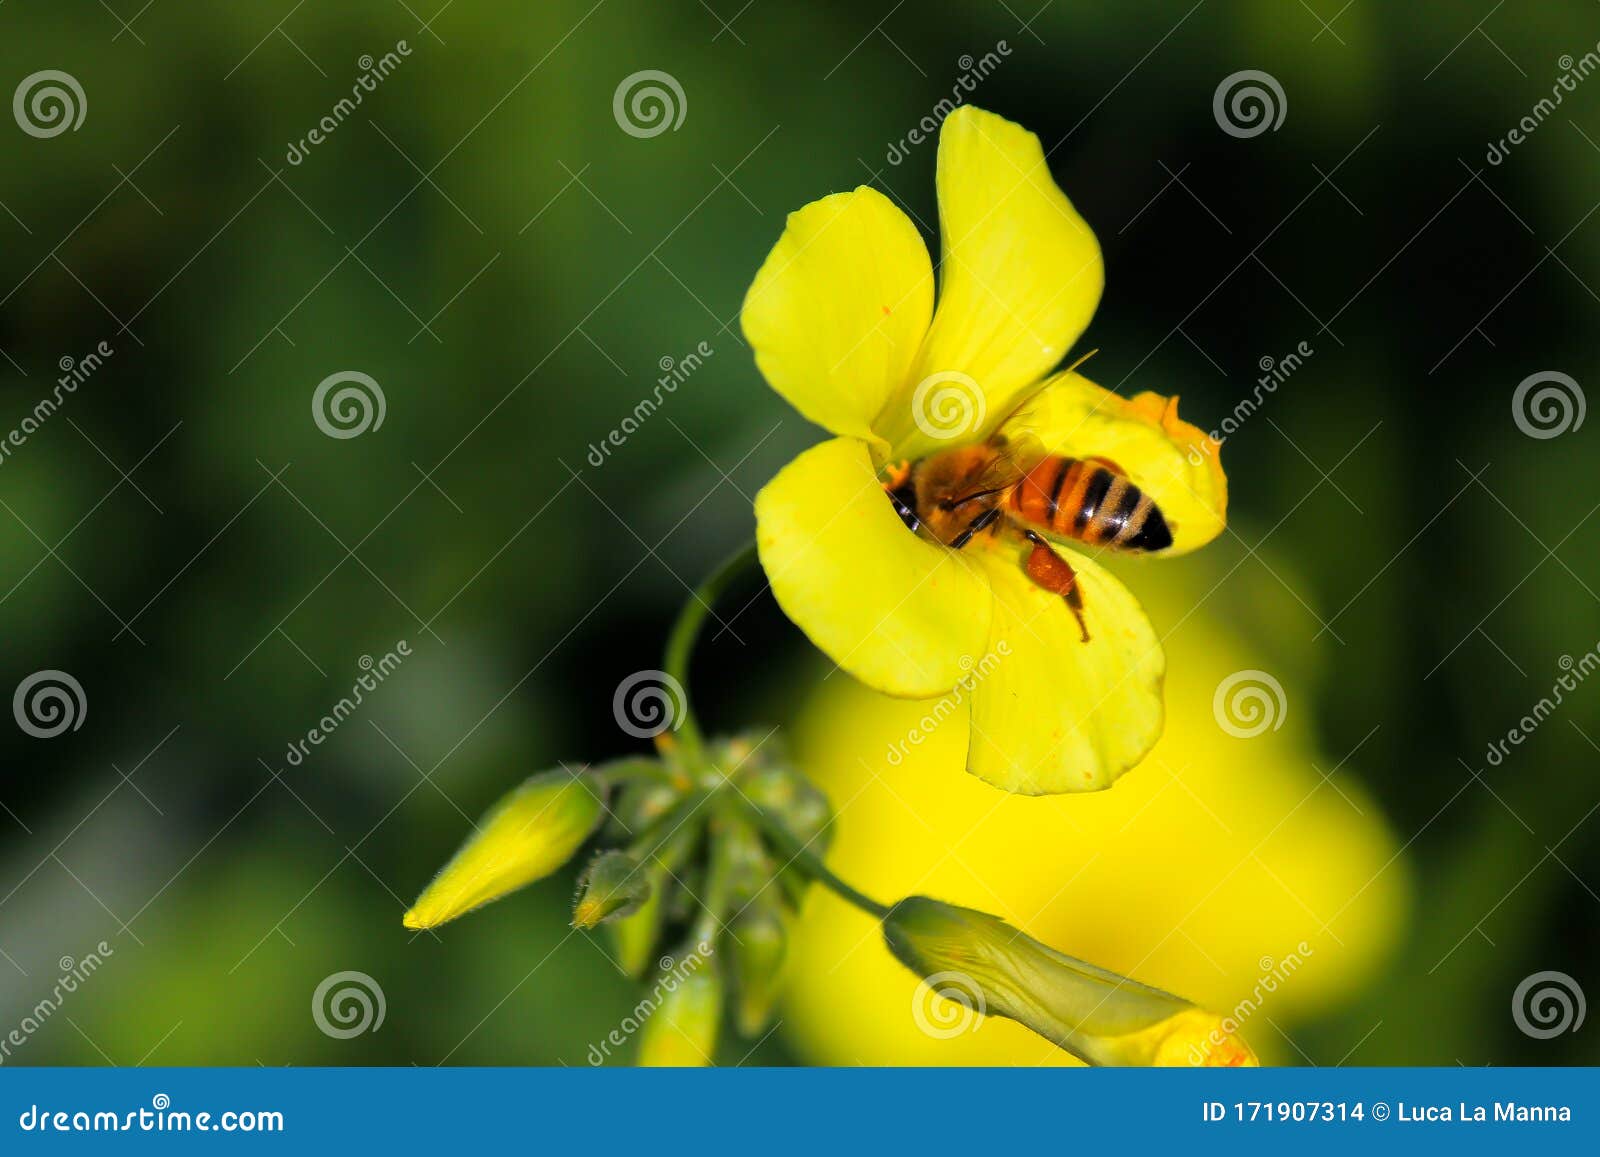 bee while sucking nectar